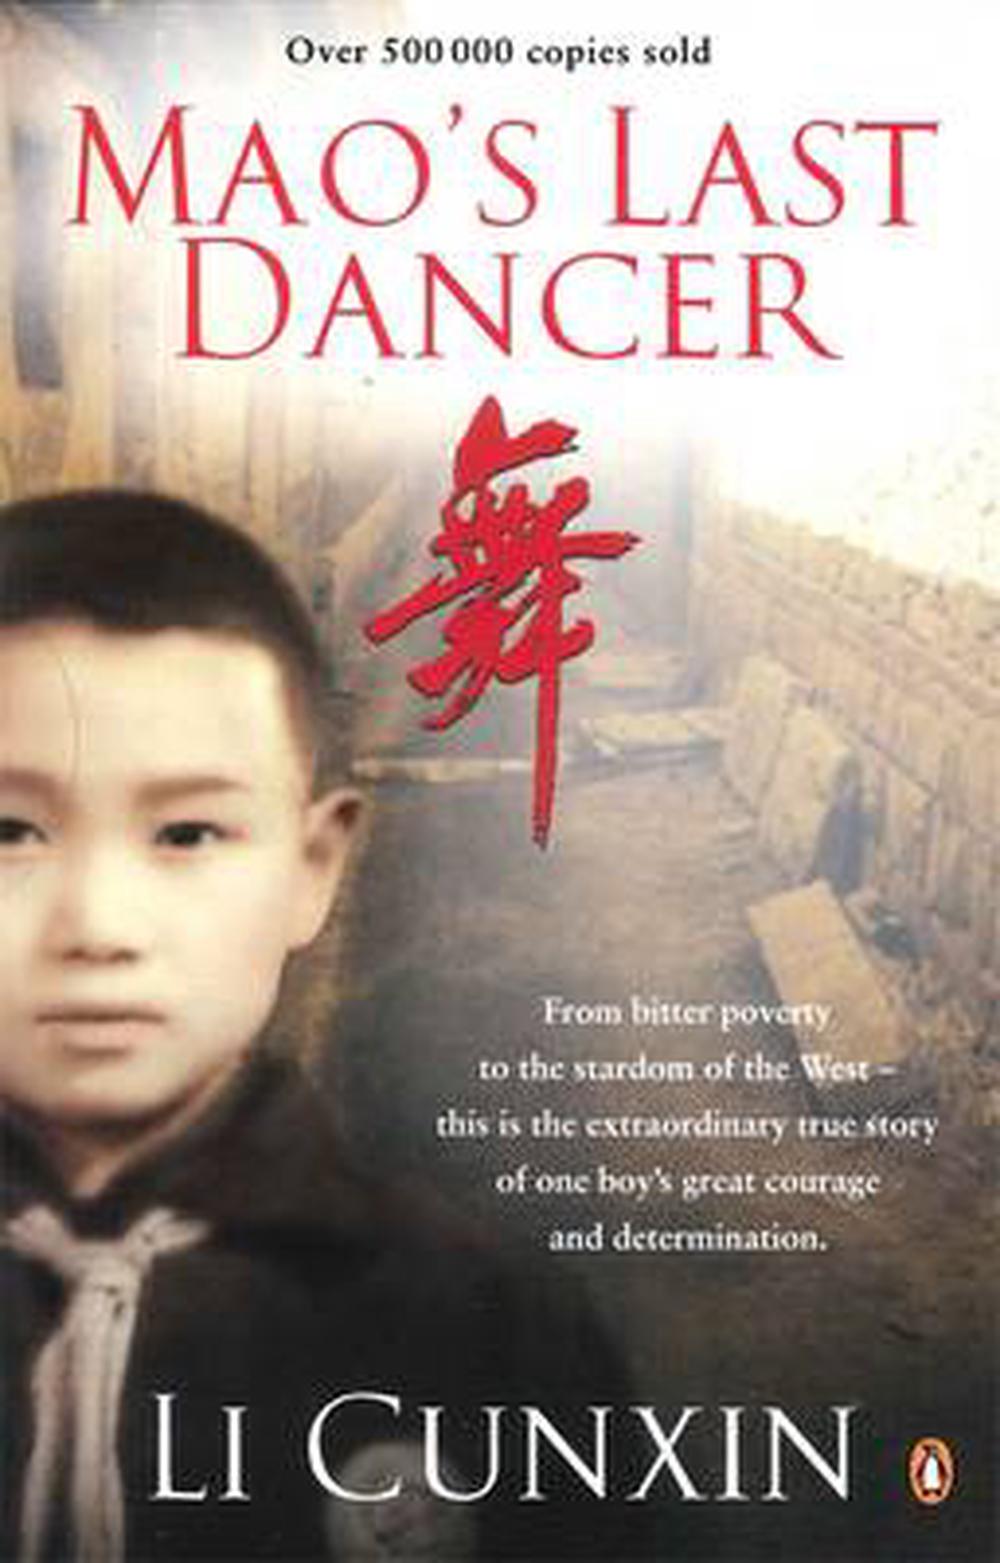 Maos Last Dancer By Li Cunxin Paperback 9780143574323 Buy Online At The Nile